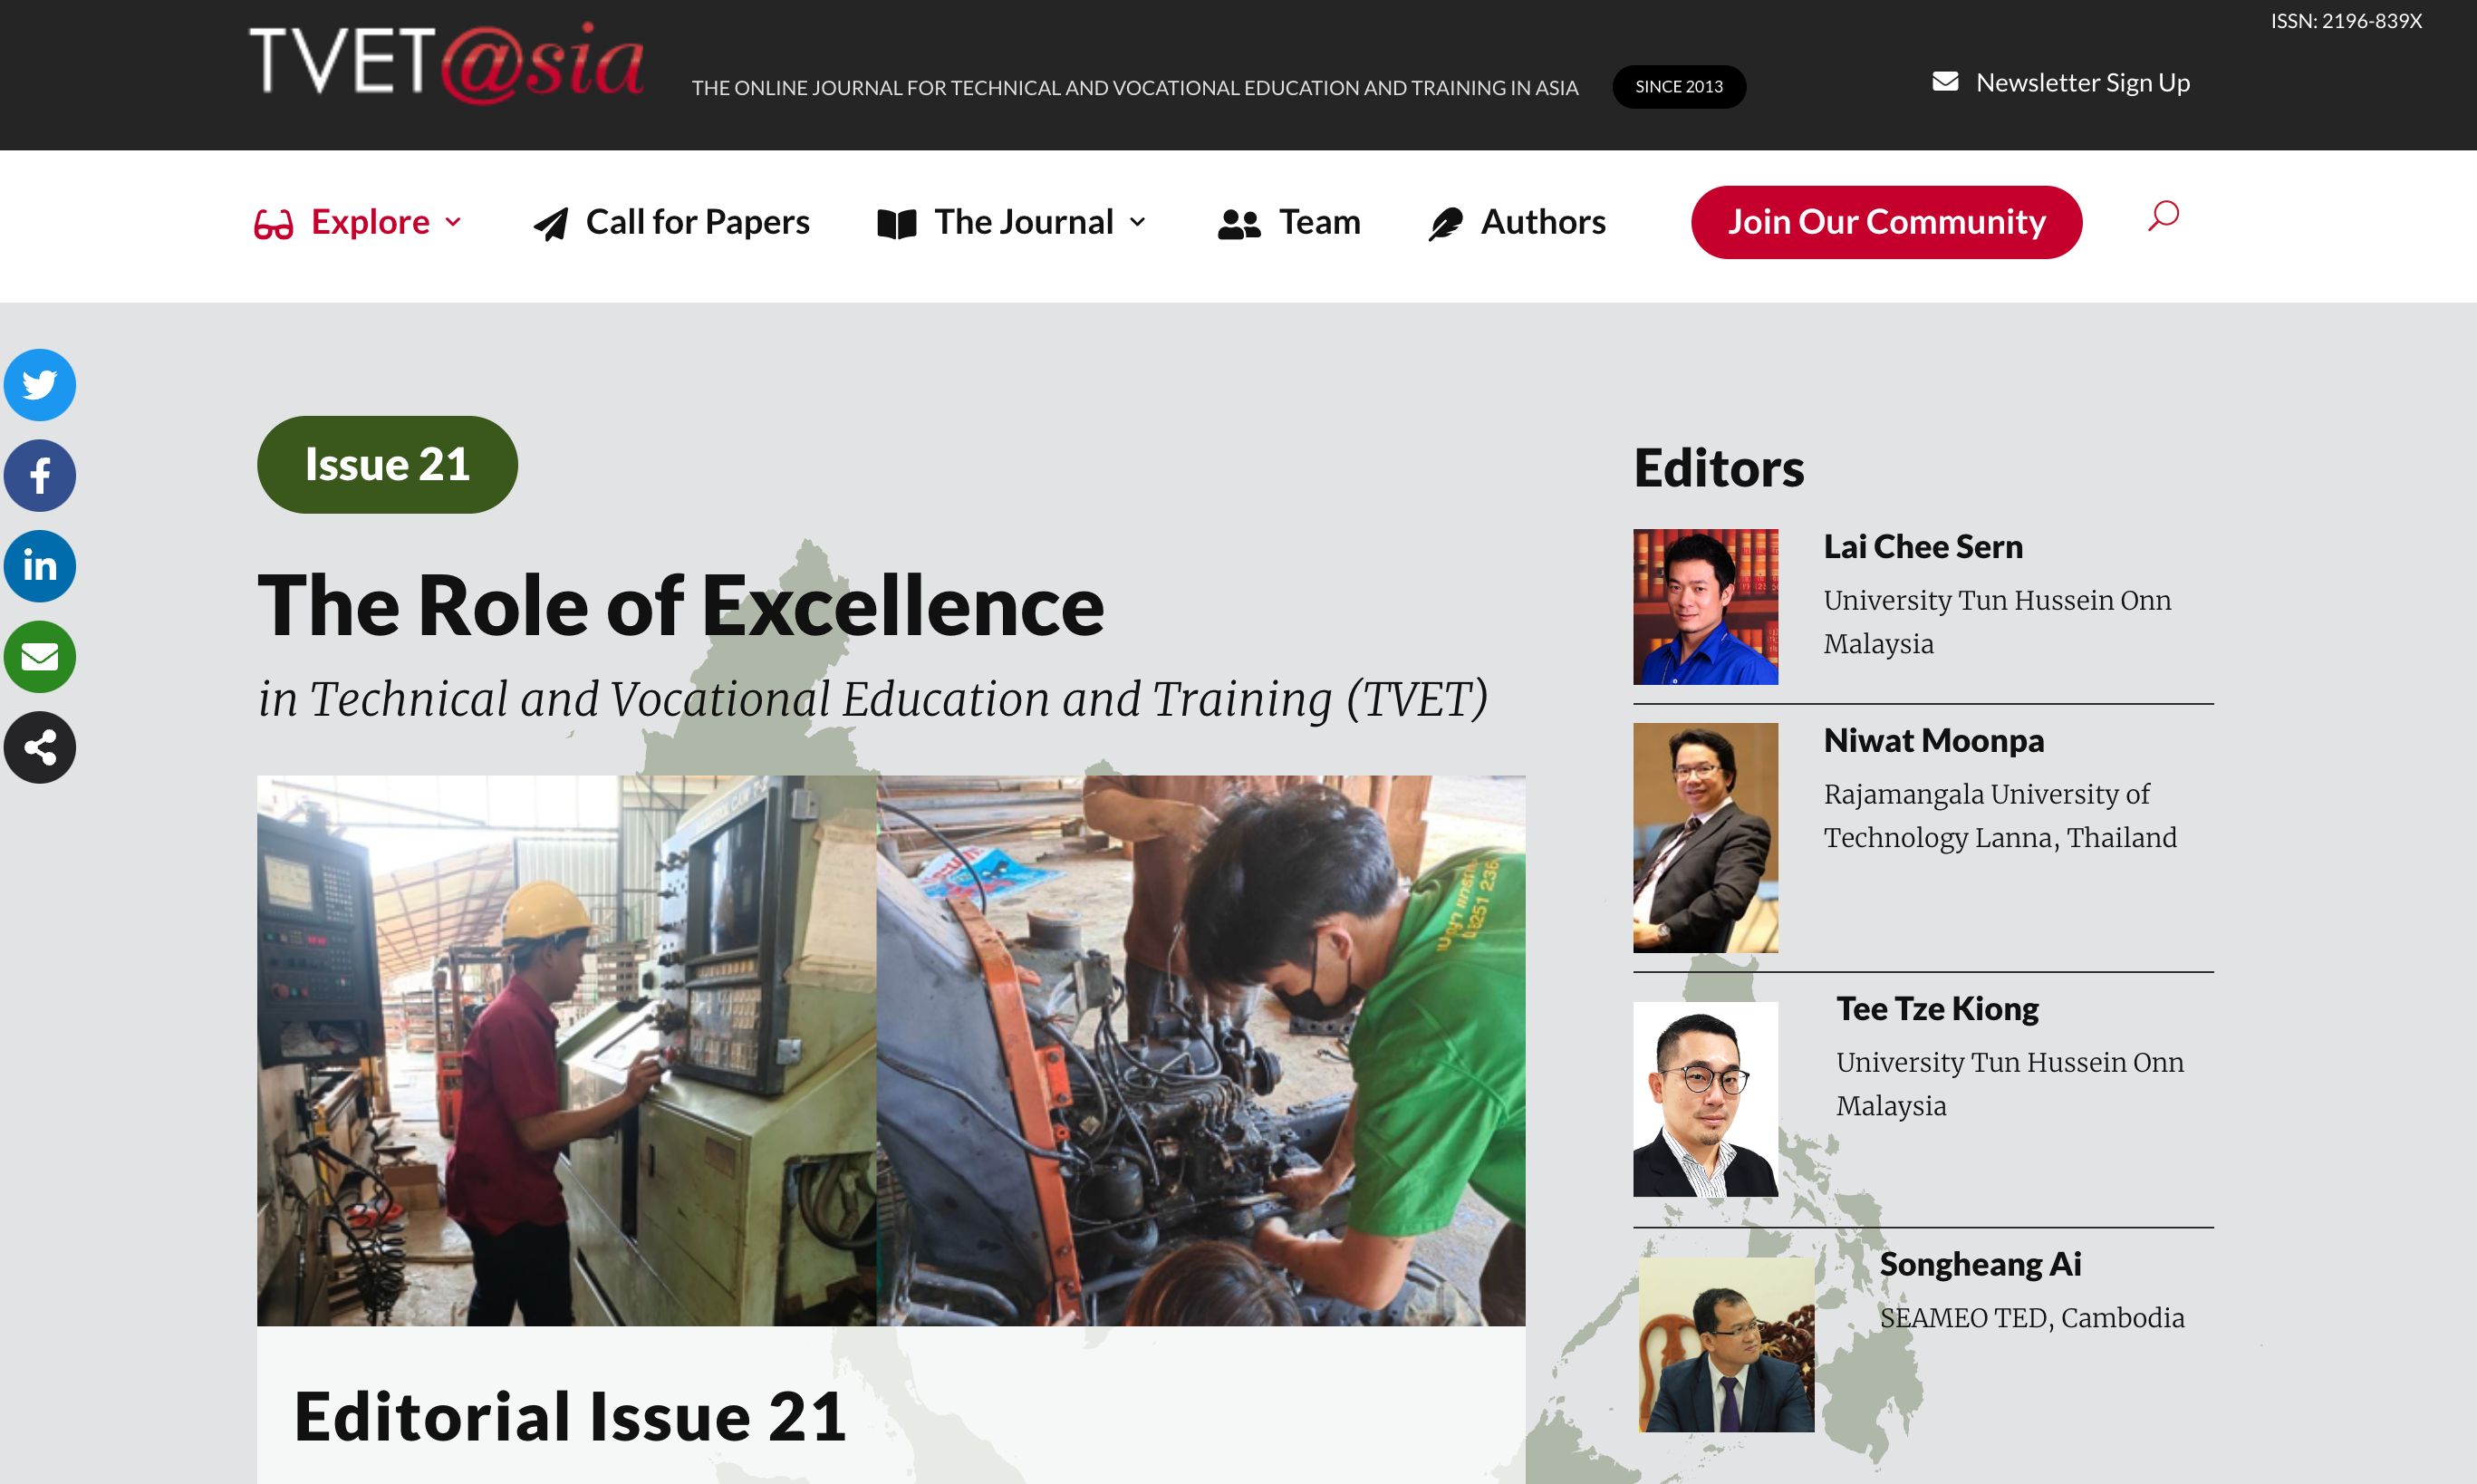 Publications - TVET@Asia online journal